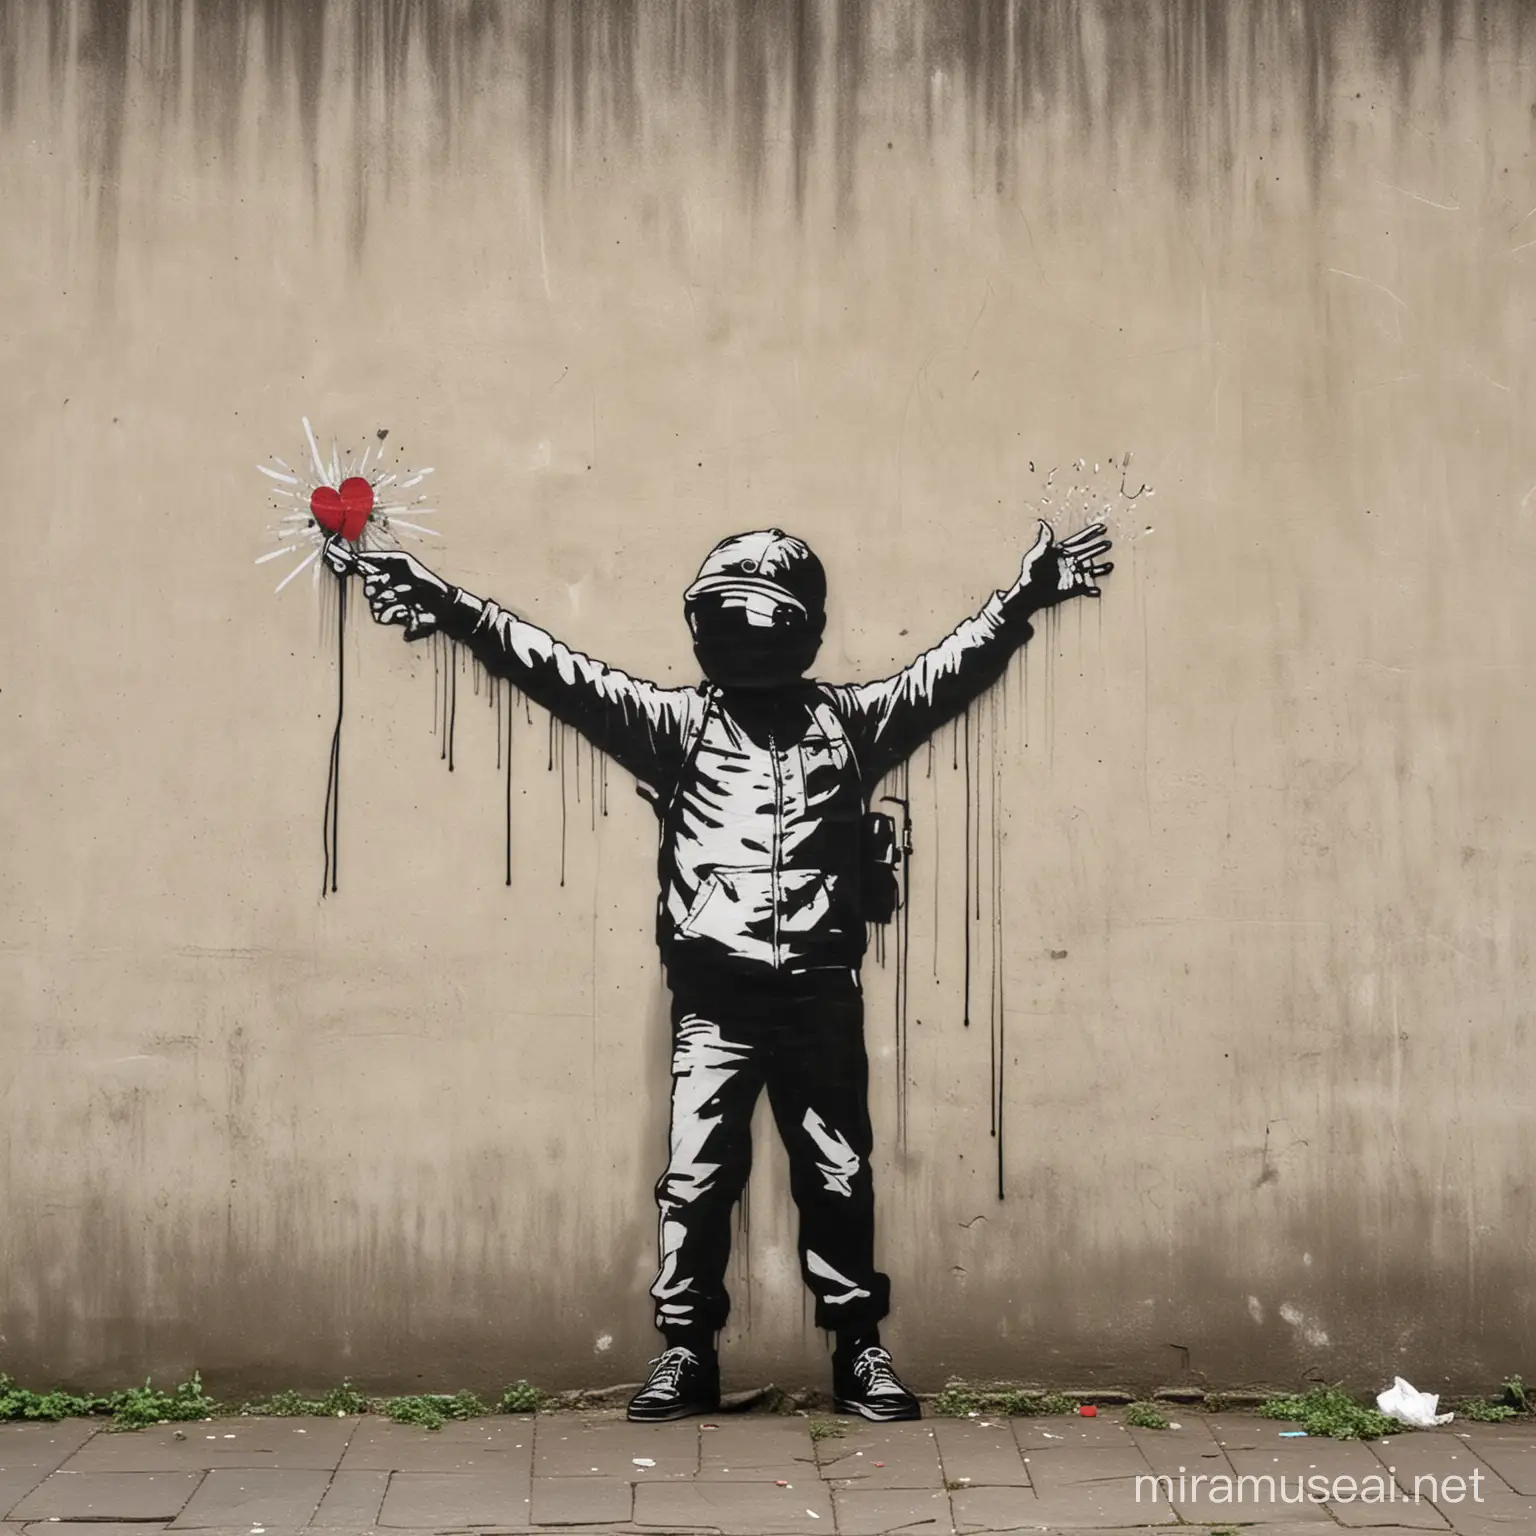 Urban Graffiti Artwork in Banksy Style Advocating for Global Peace